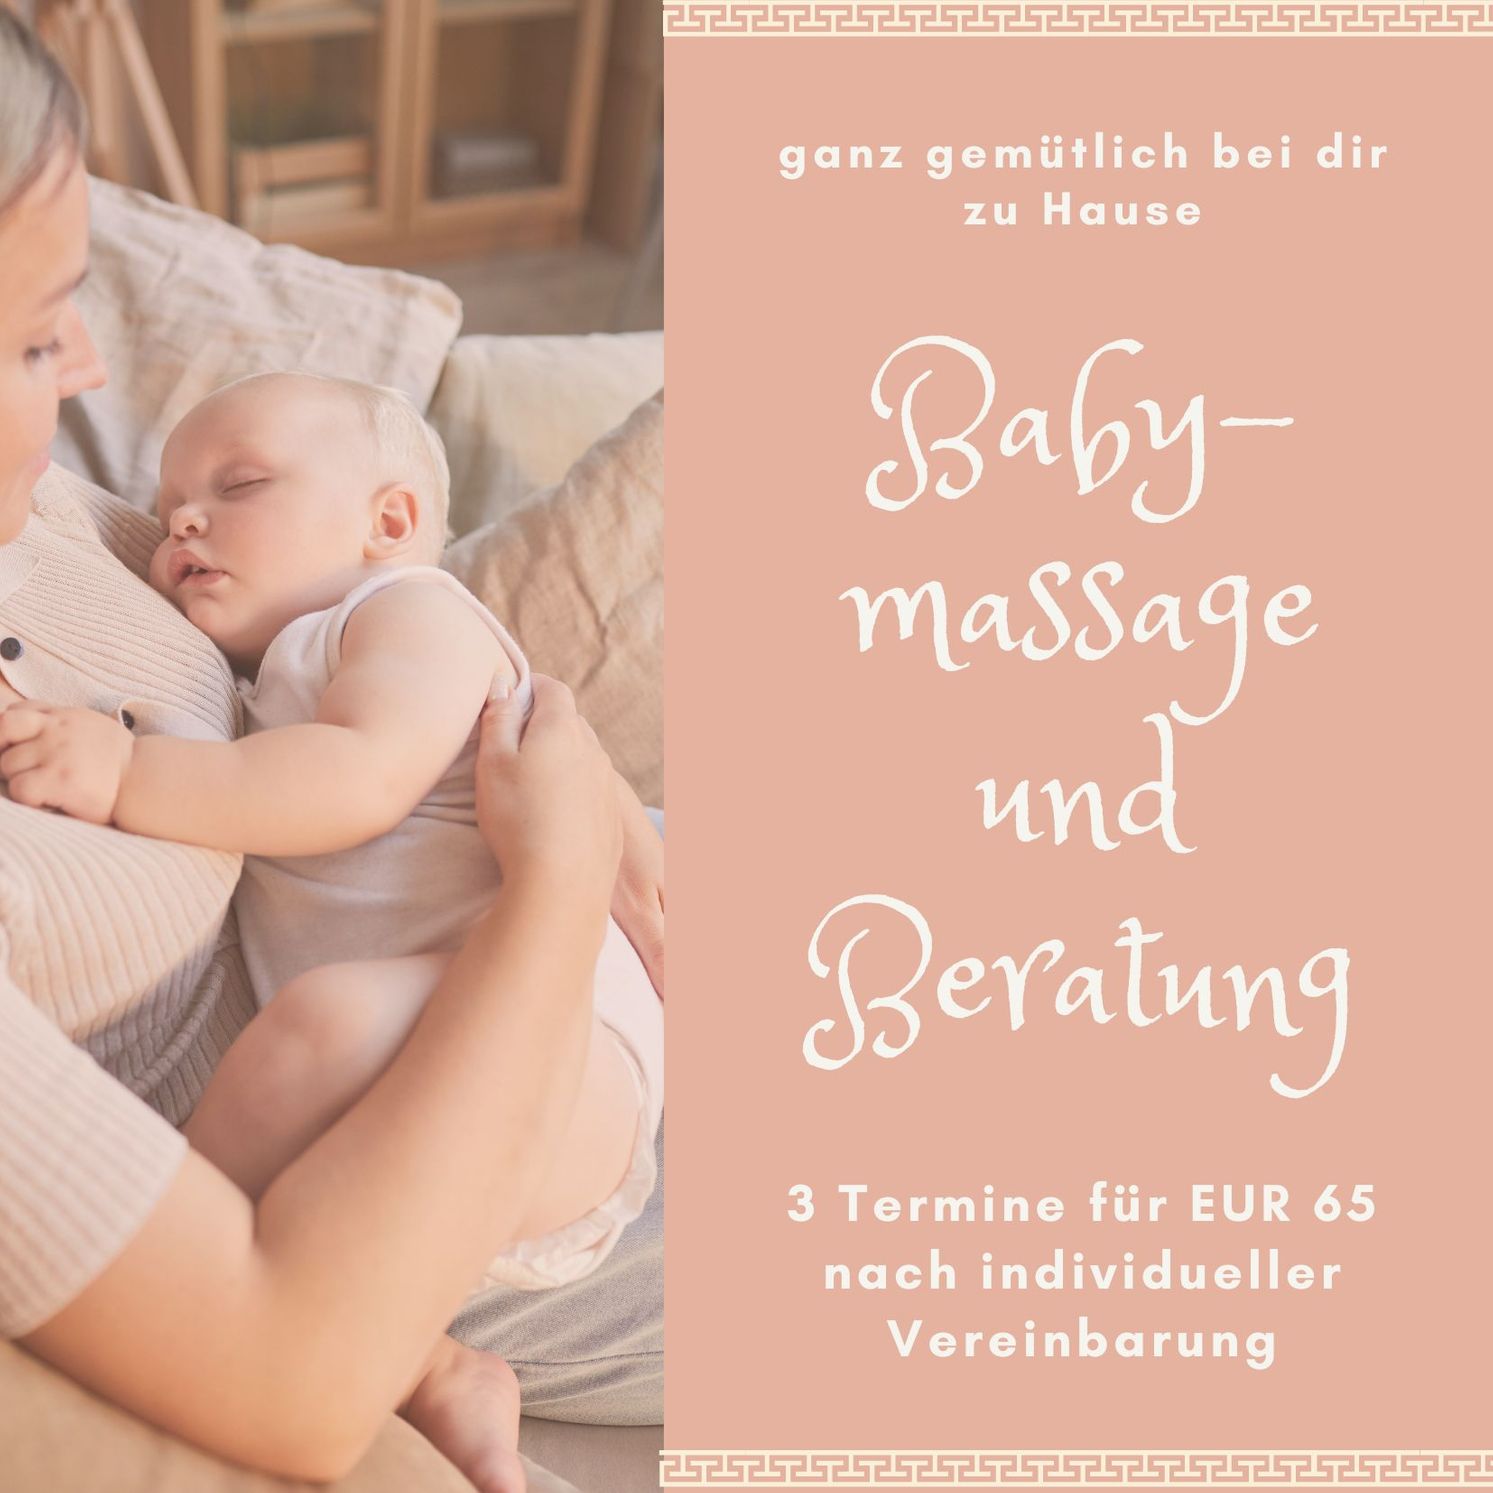 Baby-massage (4)